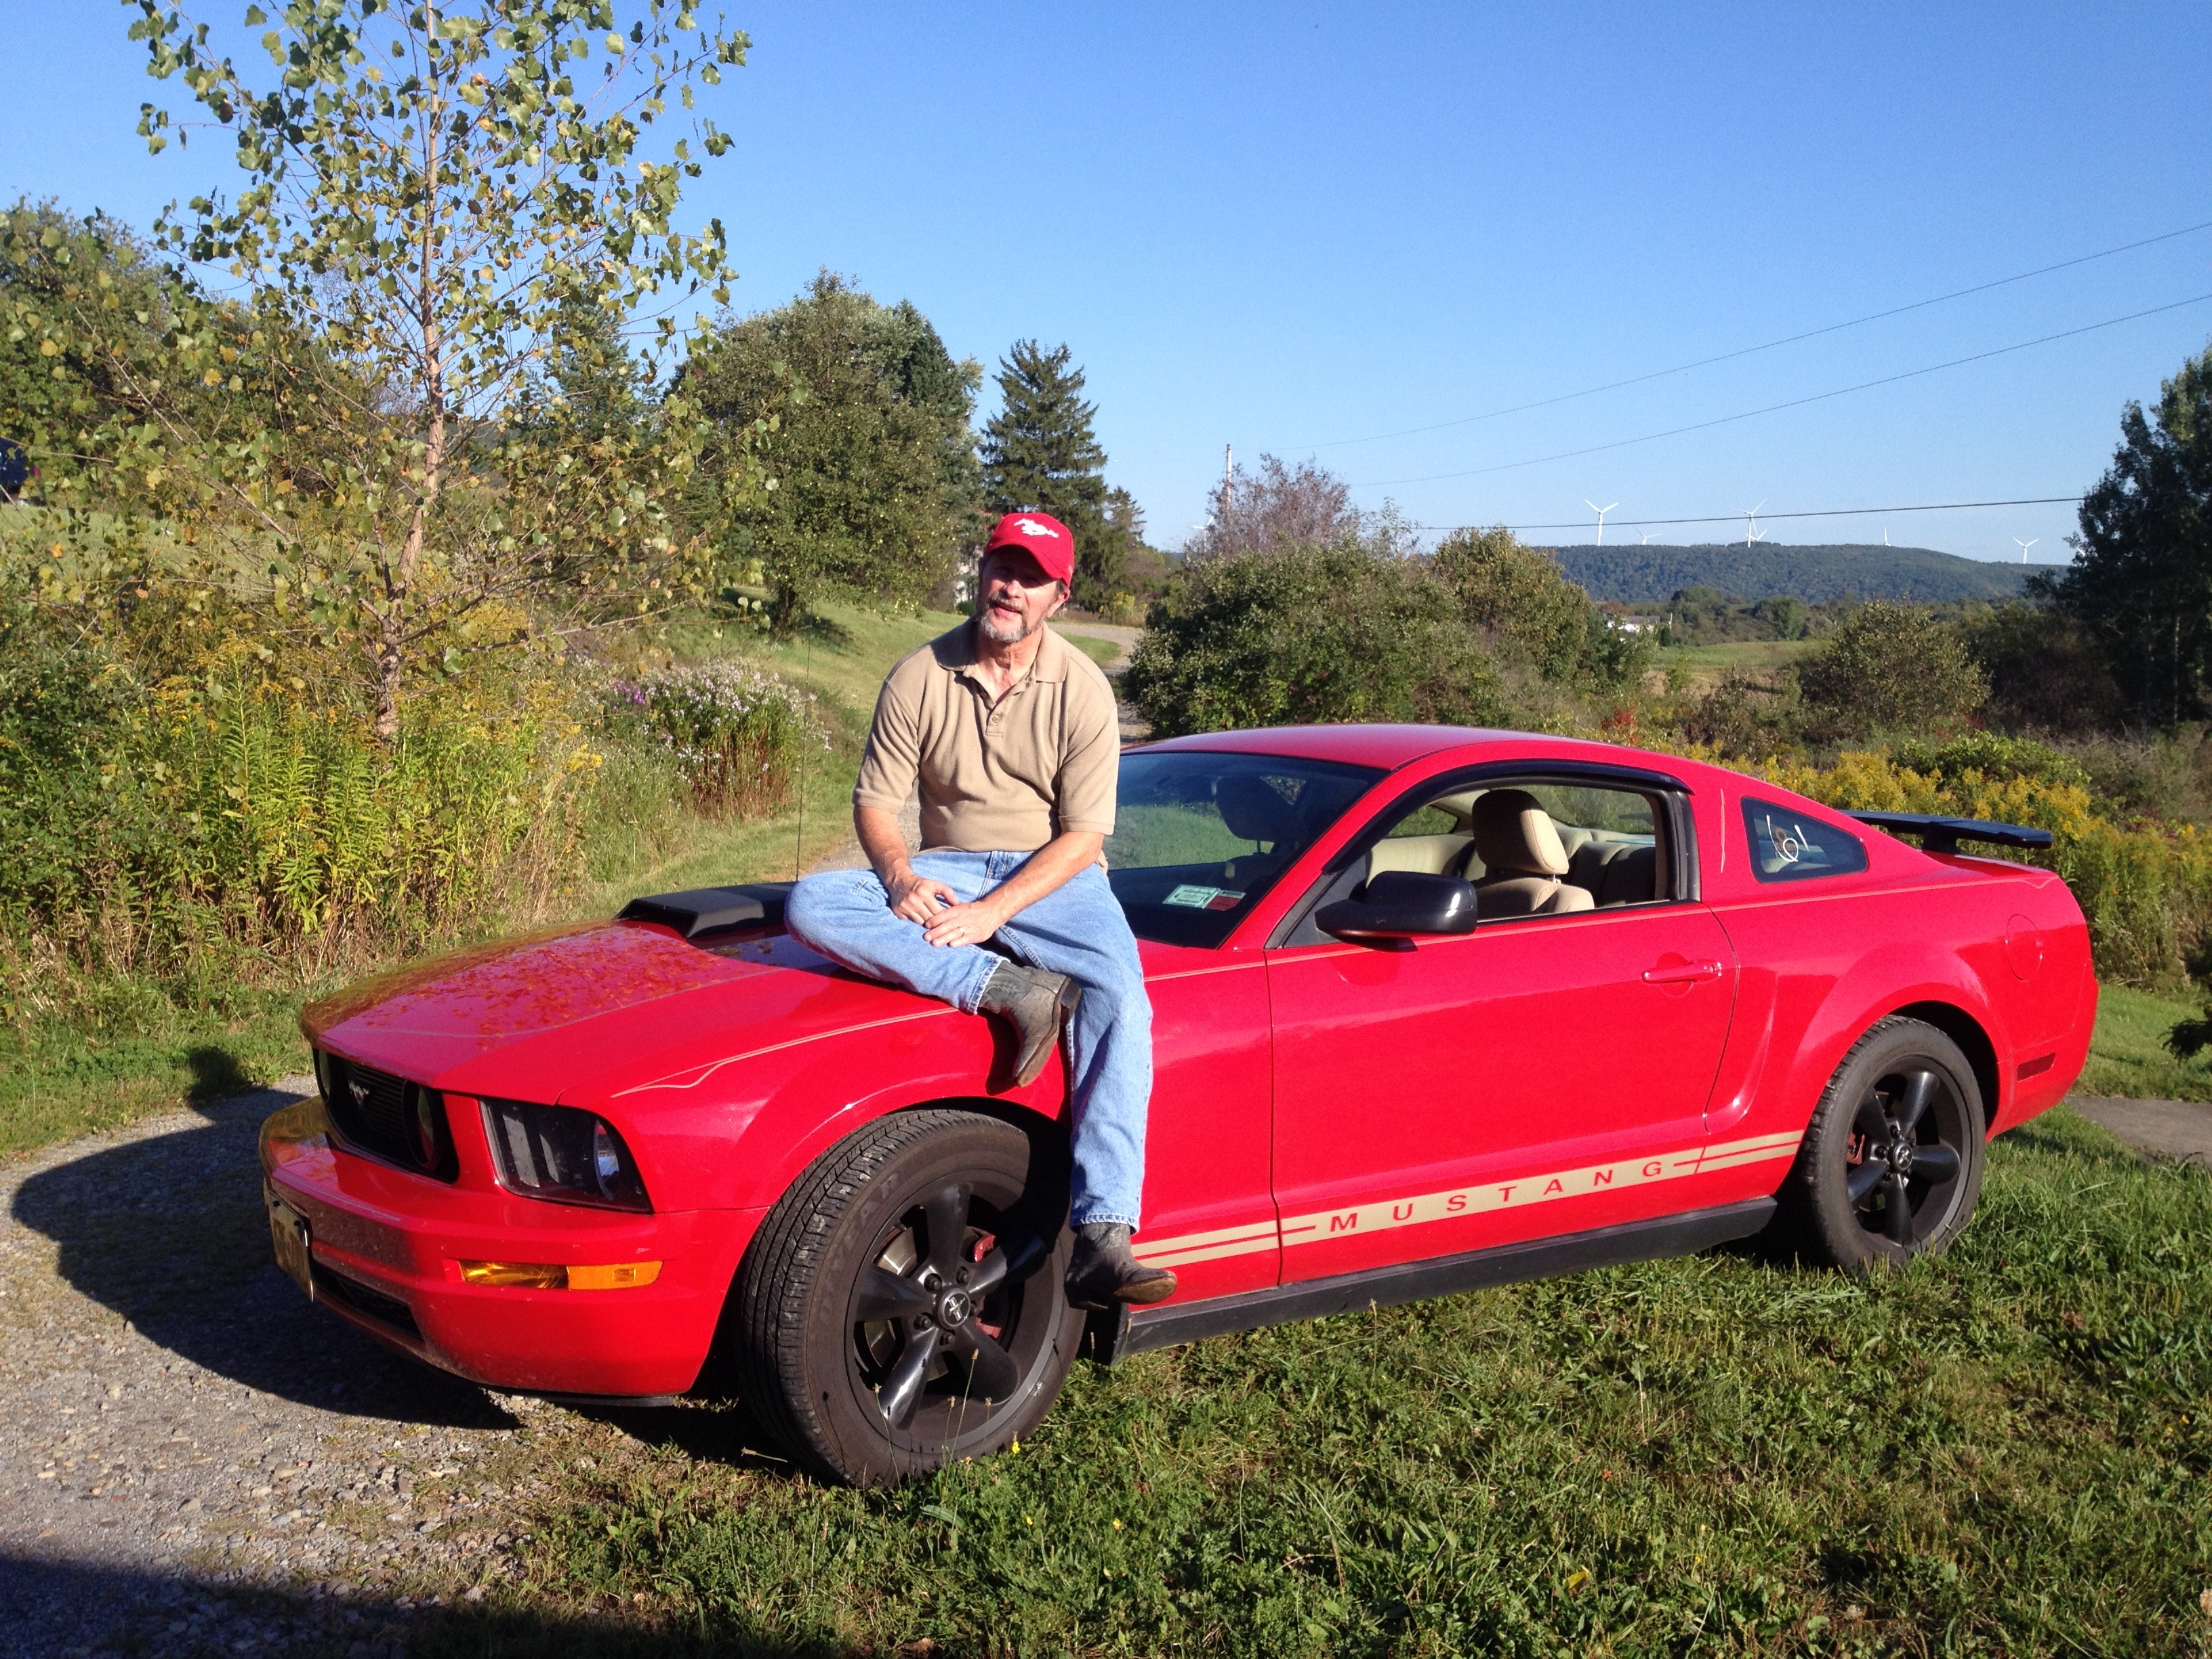 94 Mustang Retirement